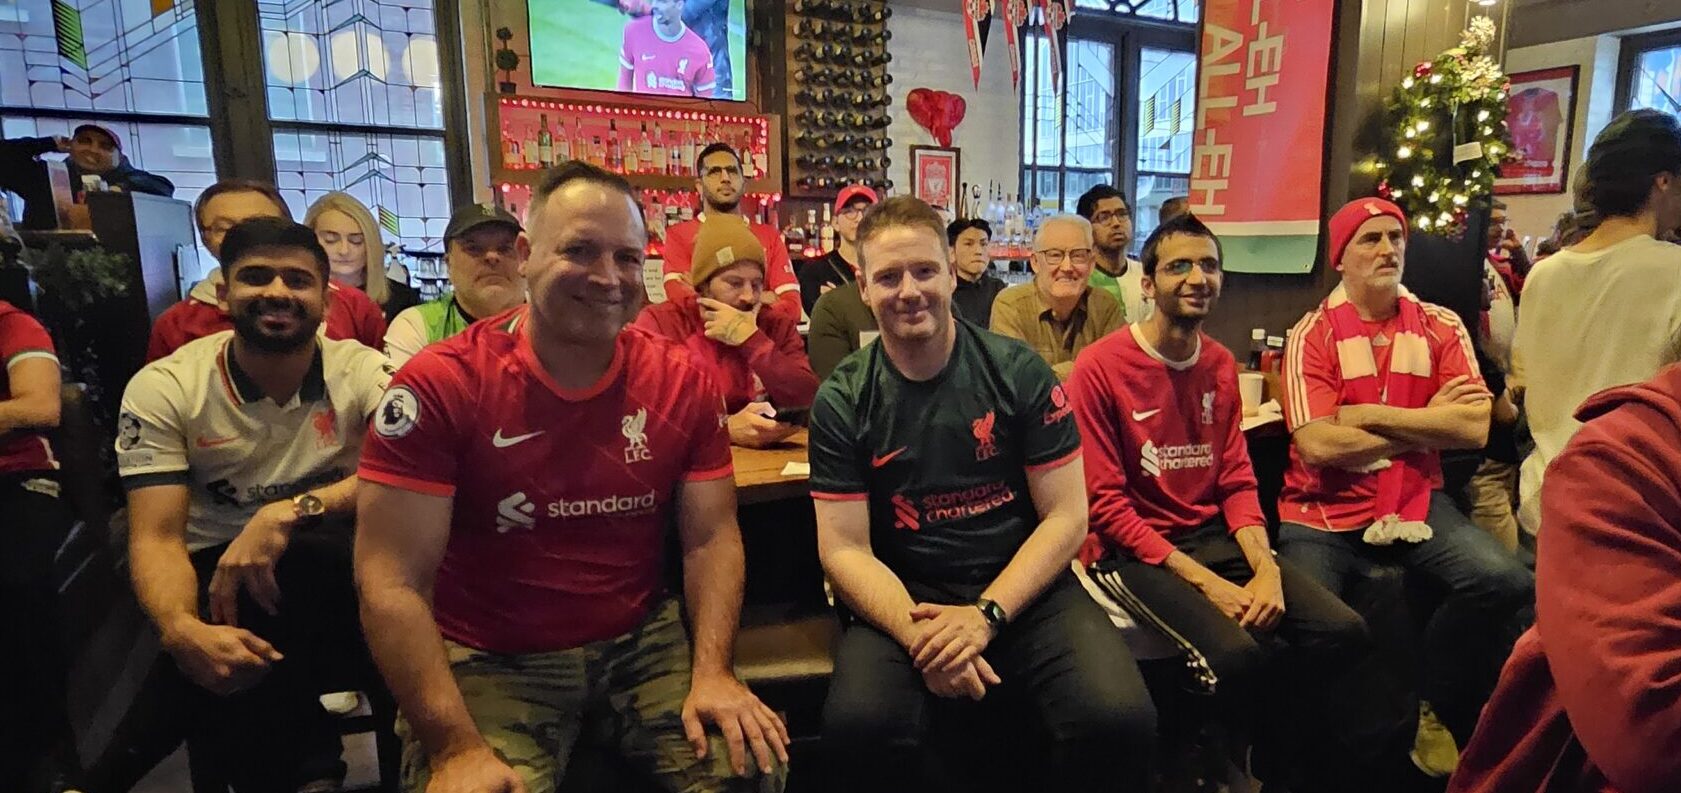 Watch LFC - Liverpool FC at Toronto Pub